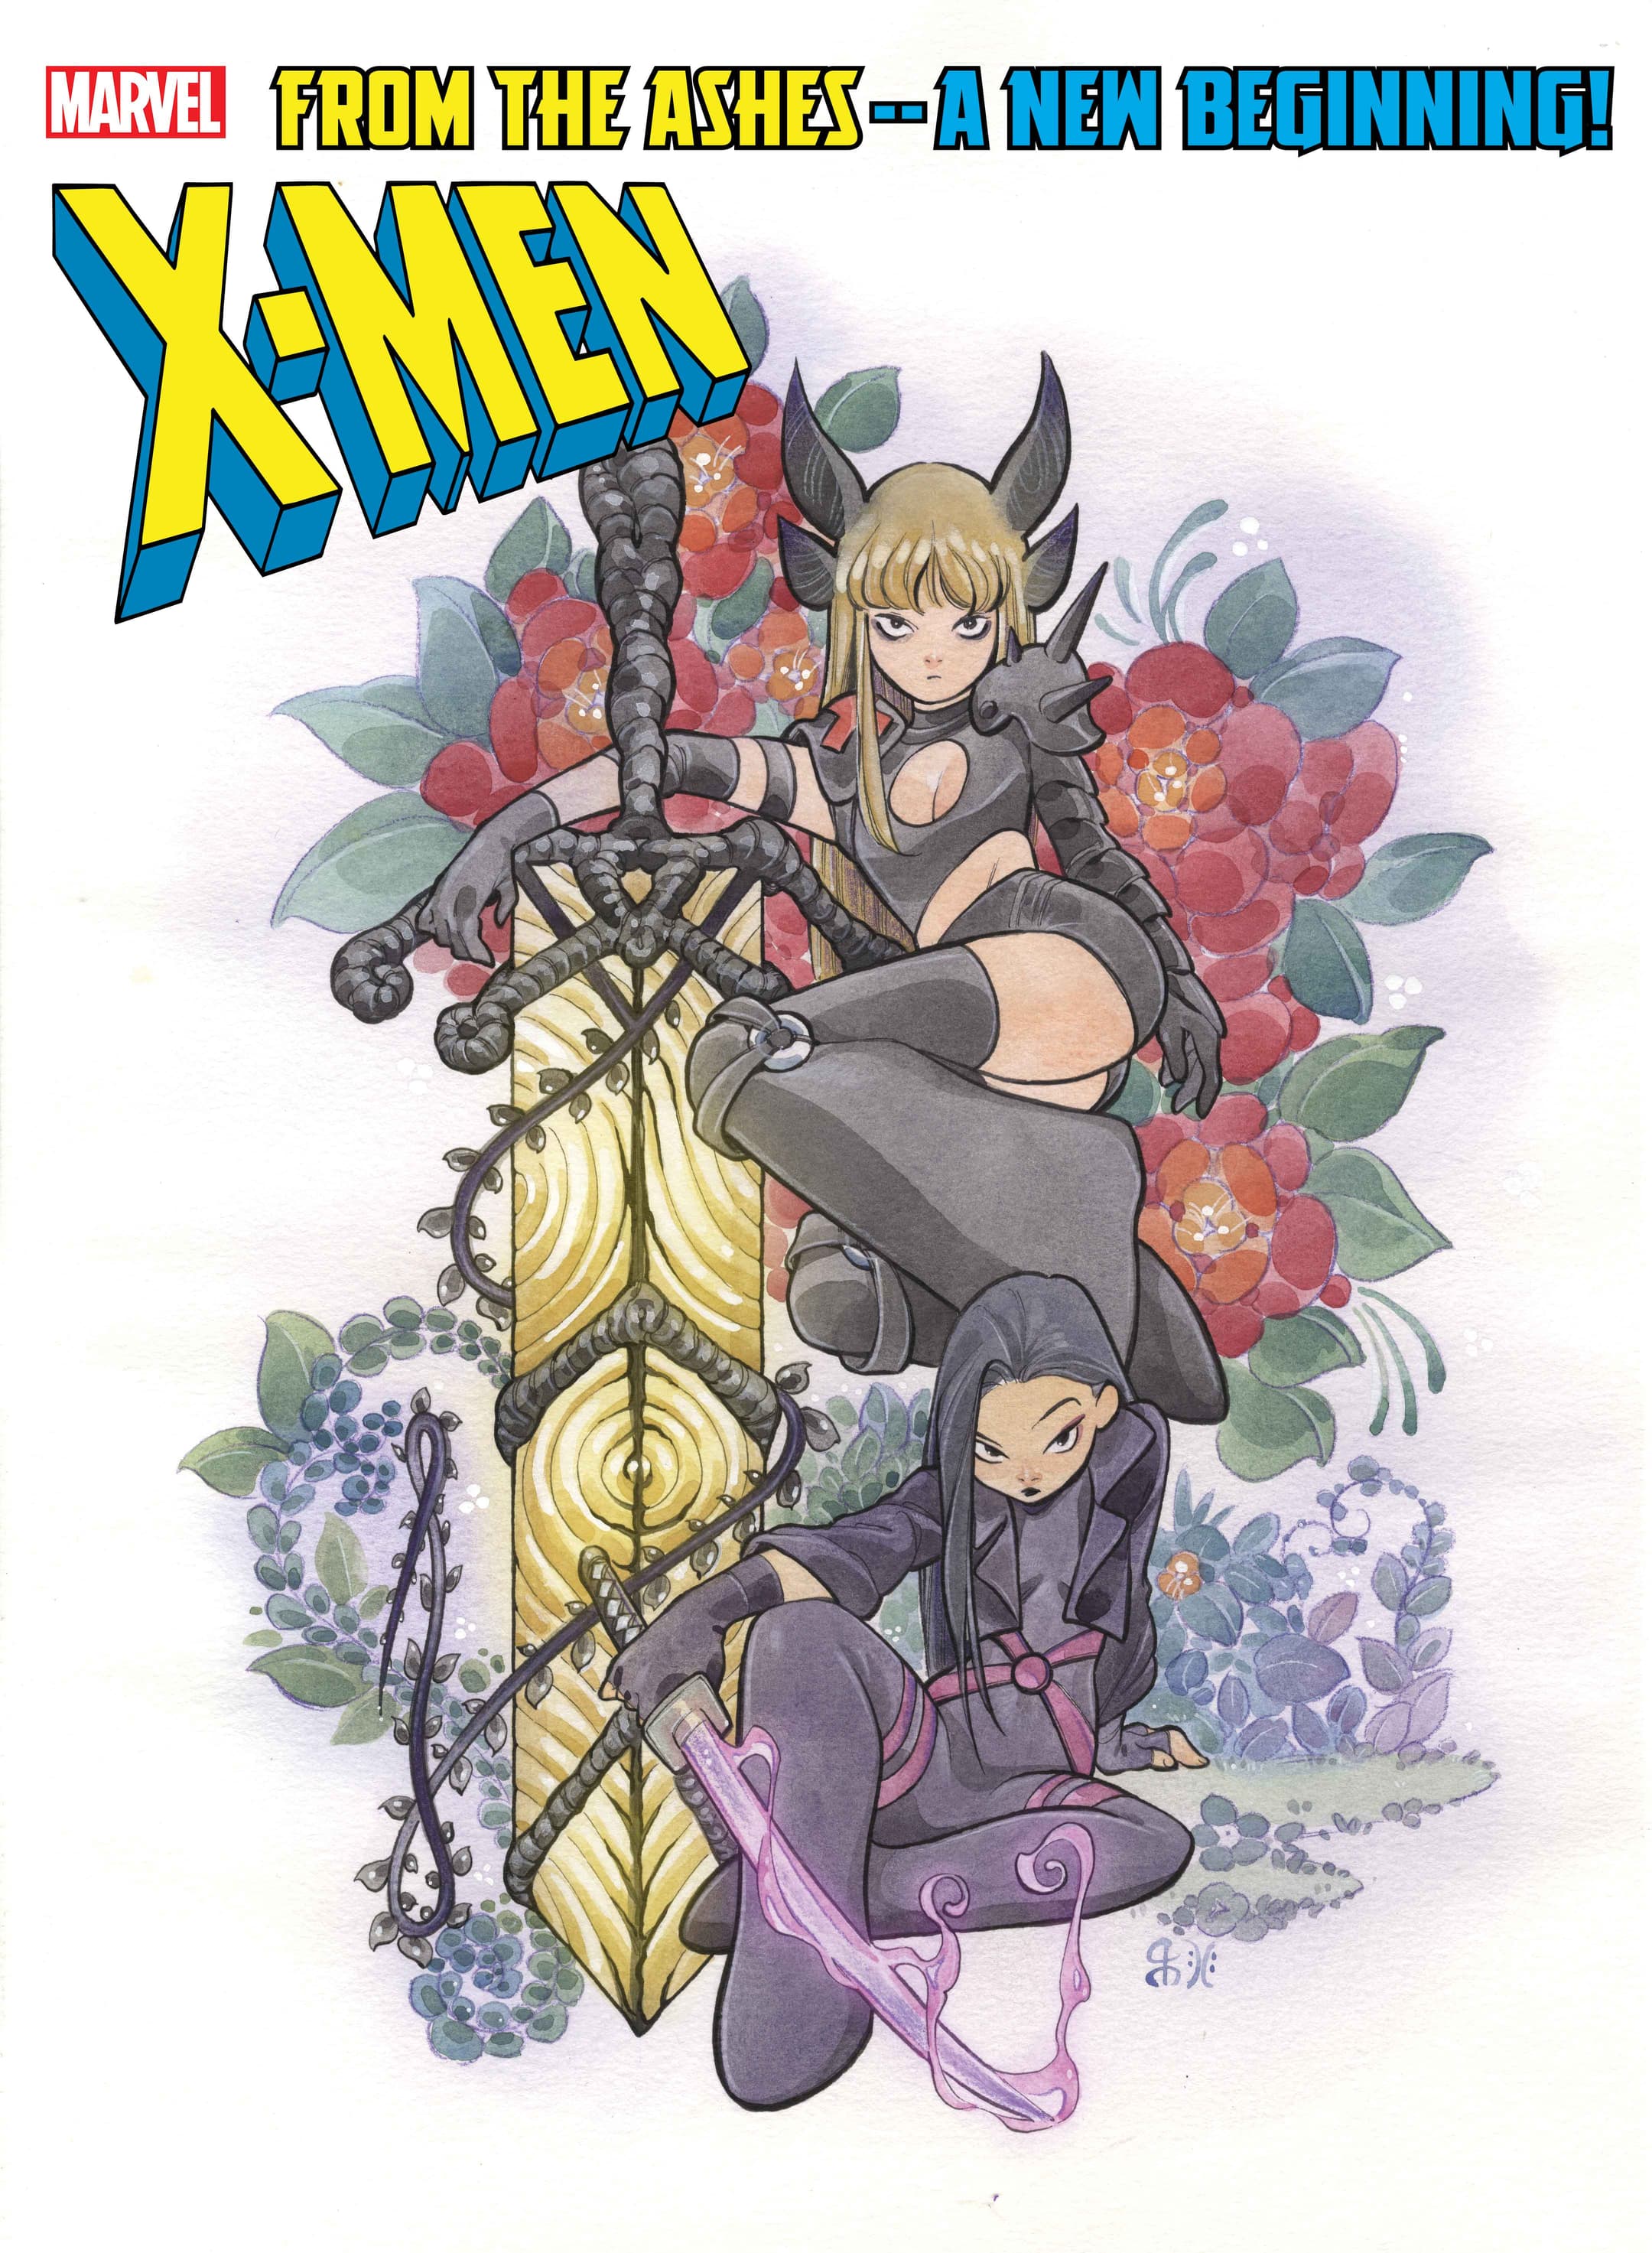 X-MEN #1 variant cover by Peach Momoko